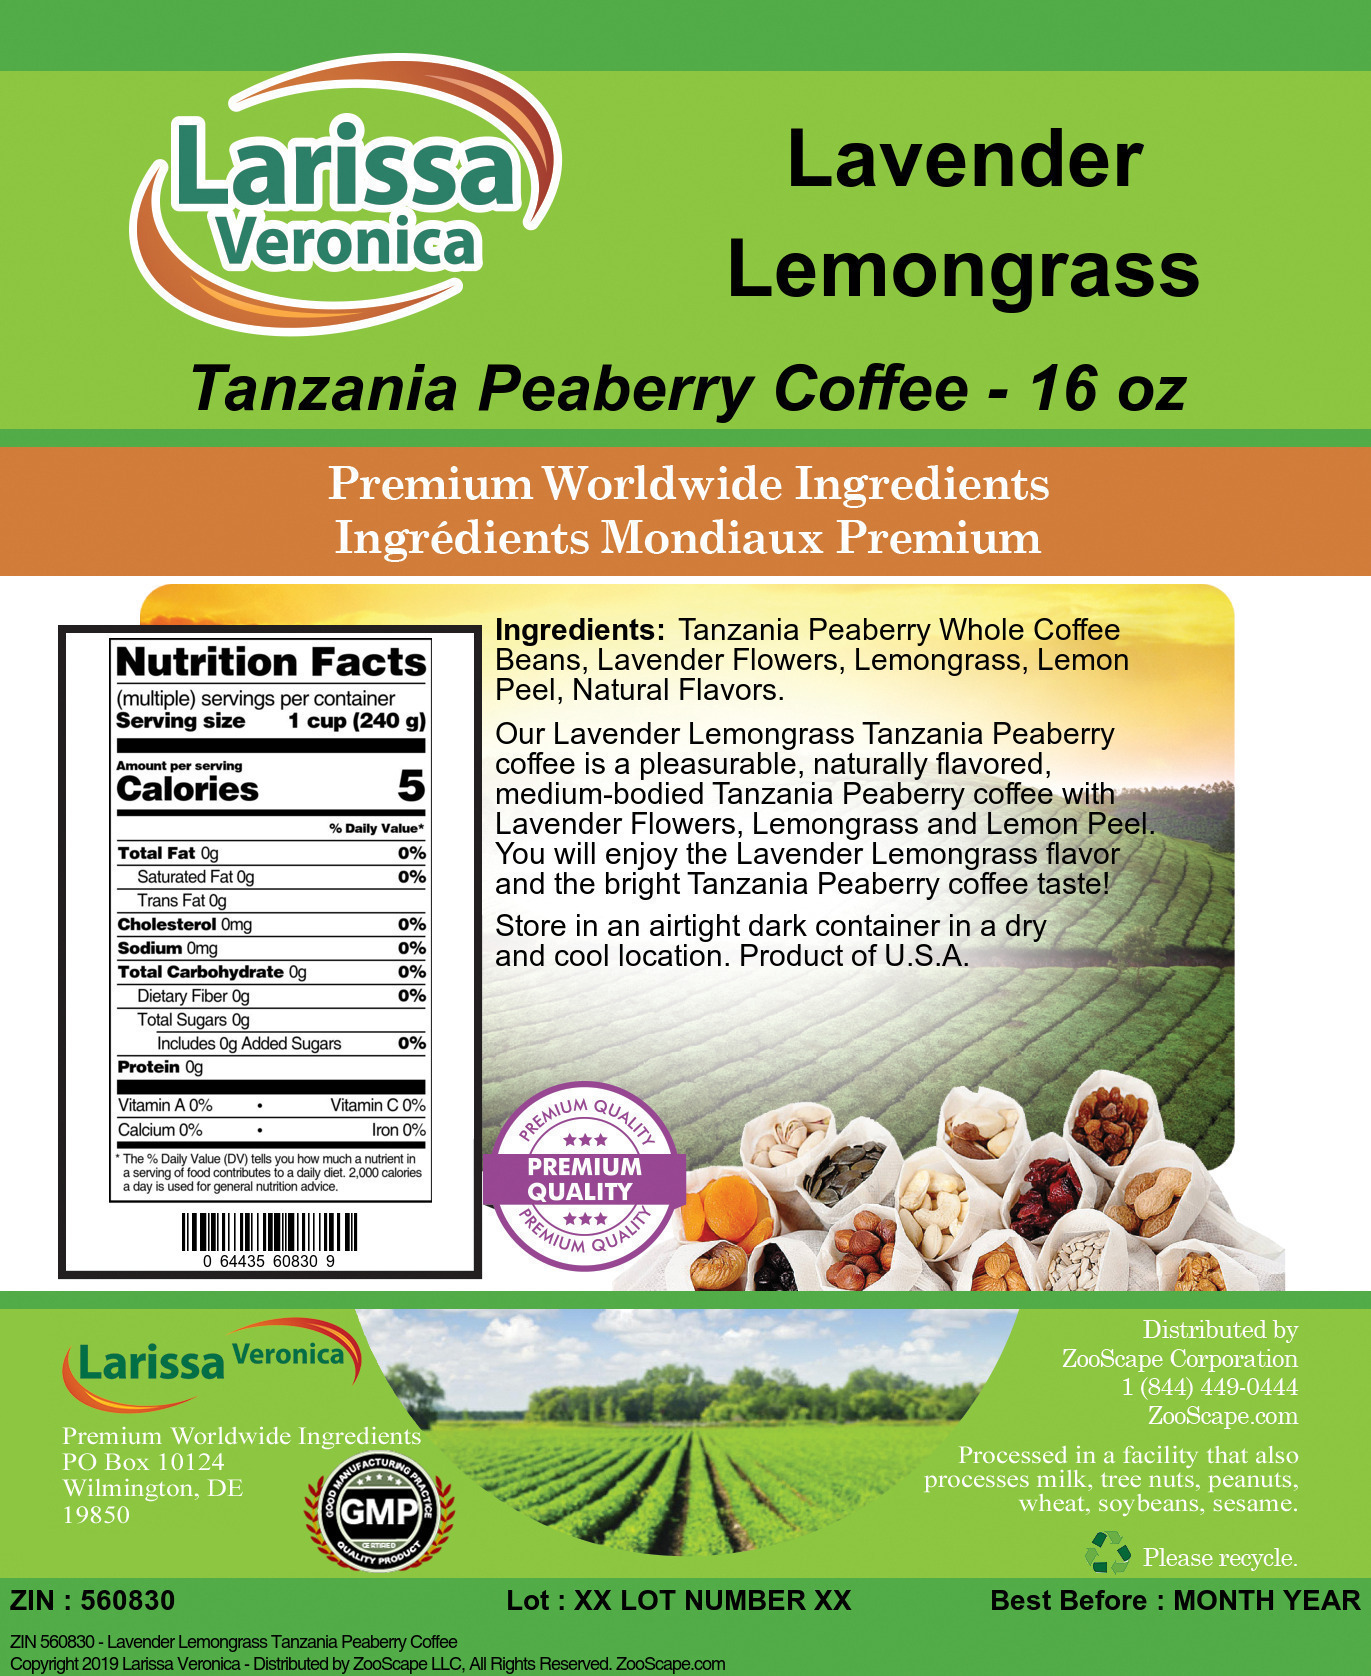 Lavender Lemongrass Tanzania Peaberry Coffee - Label